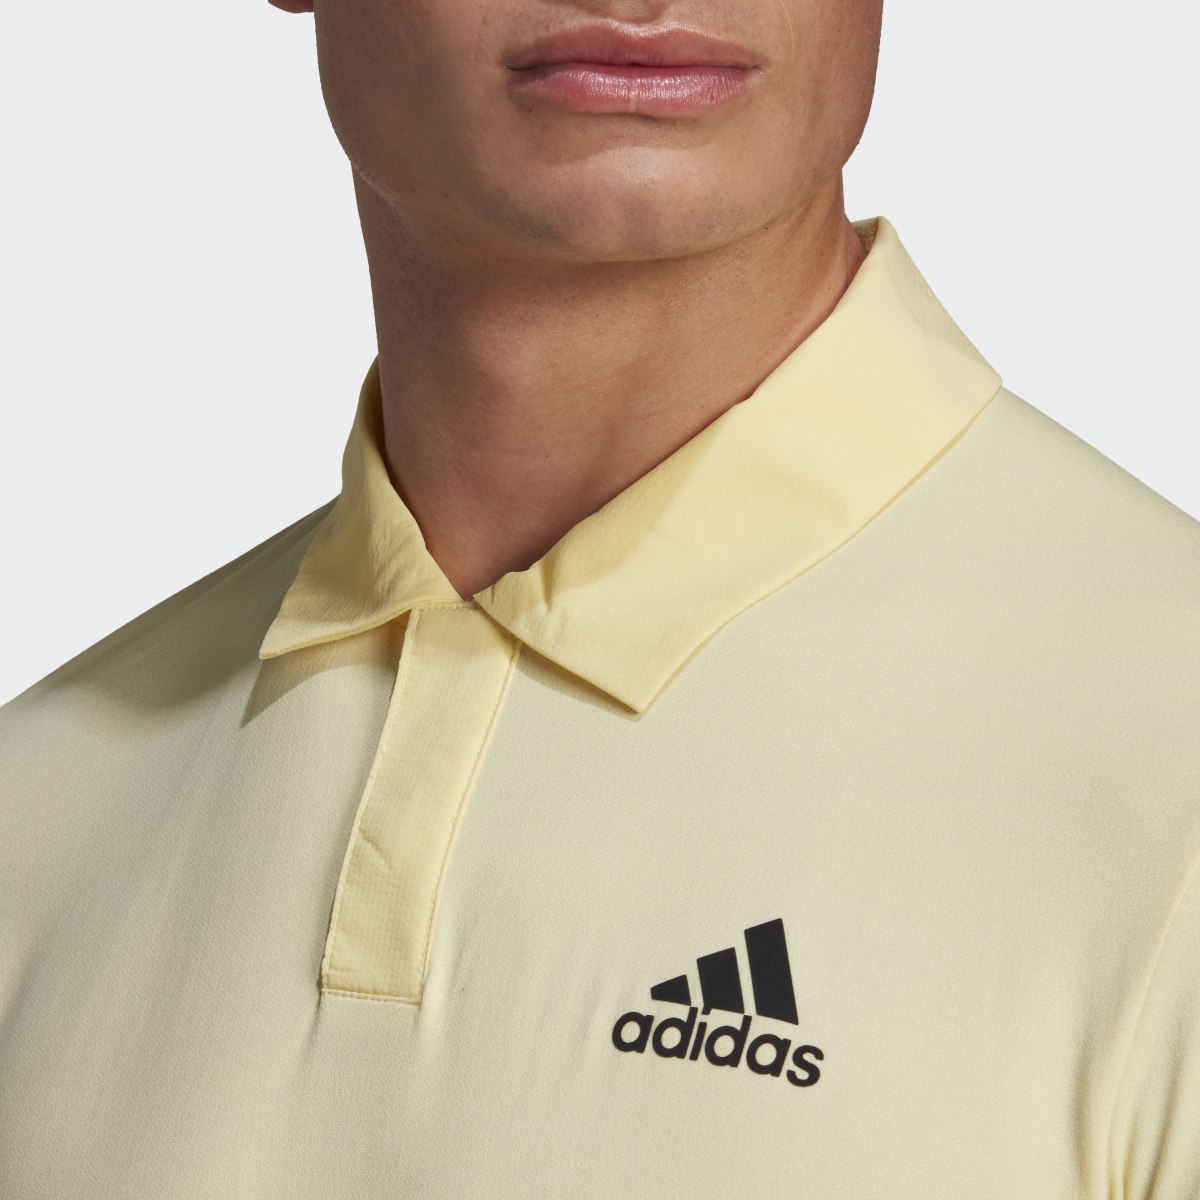 Adidas Tennis New York FreeLift Polo Shirt. 6